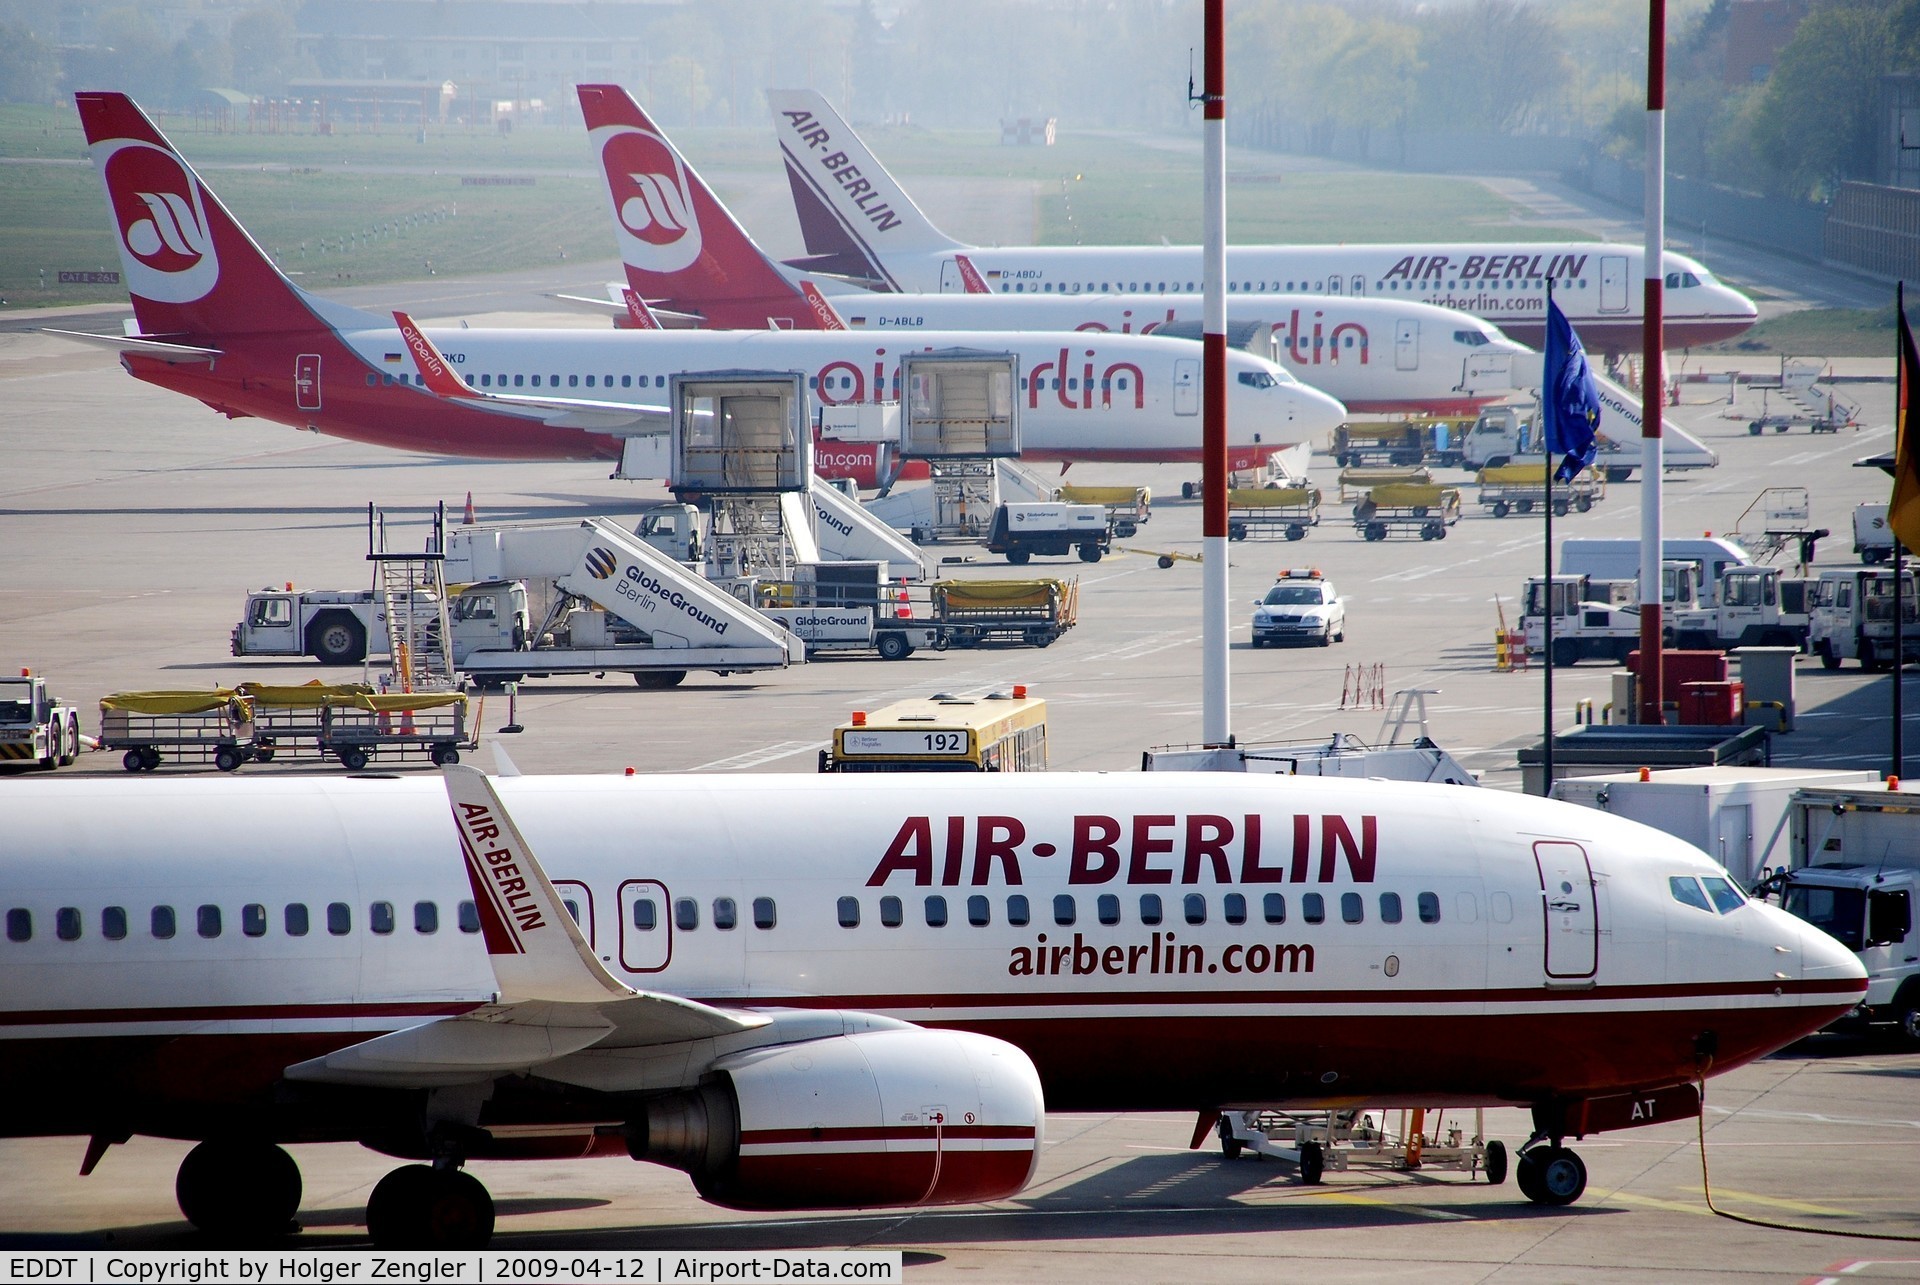 Tegel International Airport (closing in 2011), Berlin Germany (EDDT) - At AIR BERLIN homebase